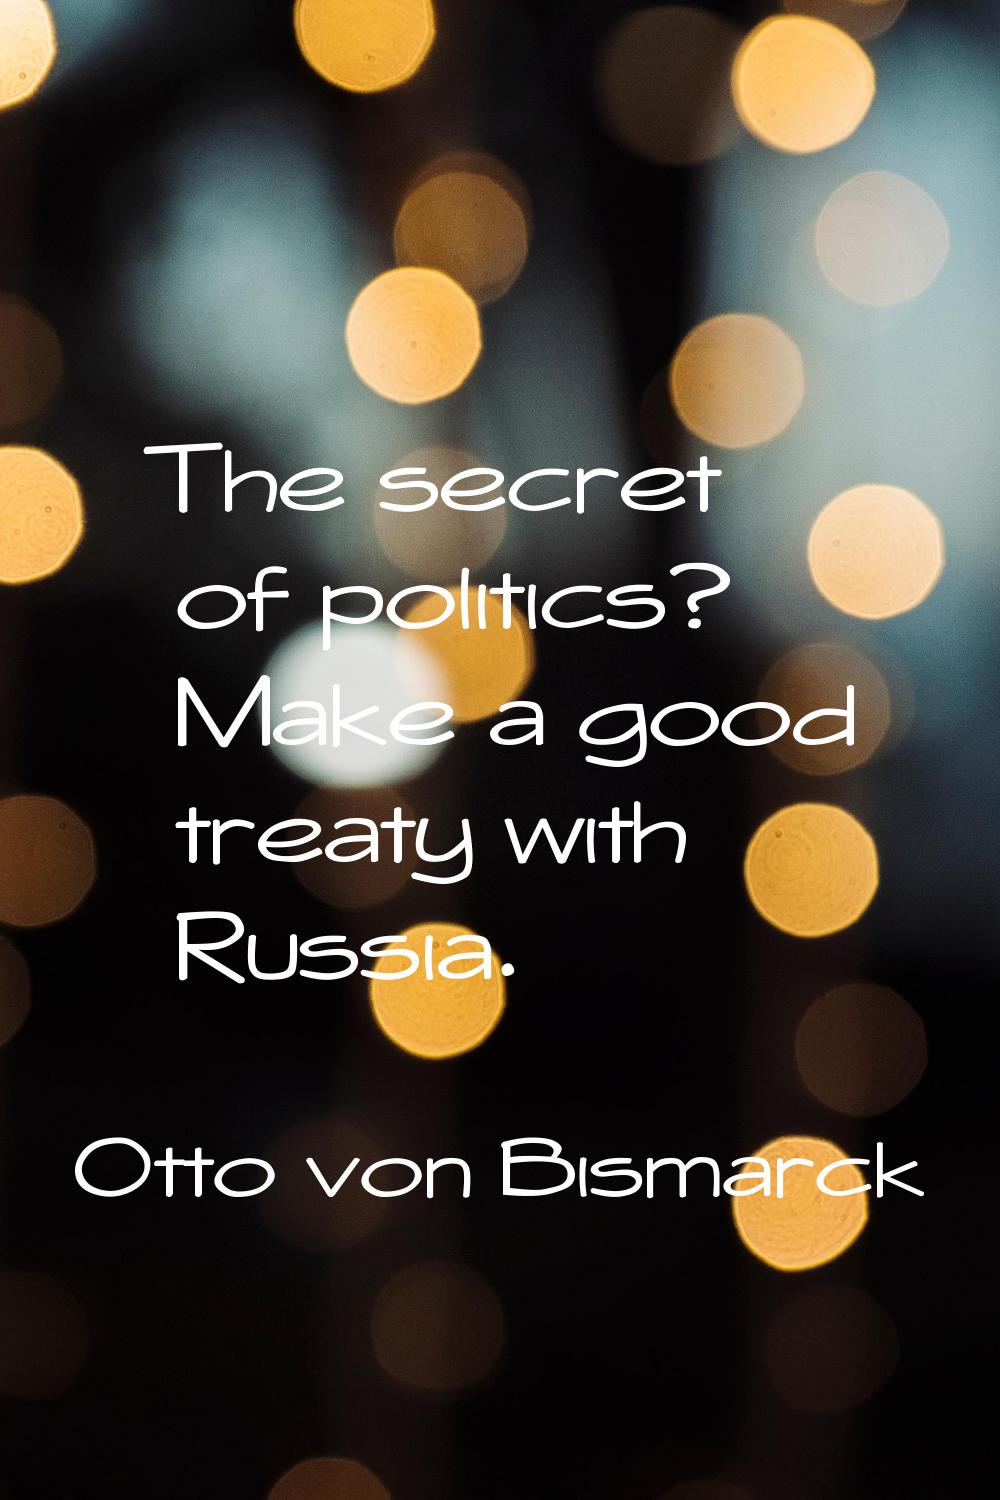 The secret of politics? Make a good treaty with Russia.